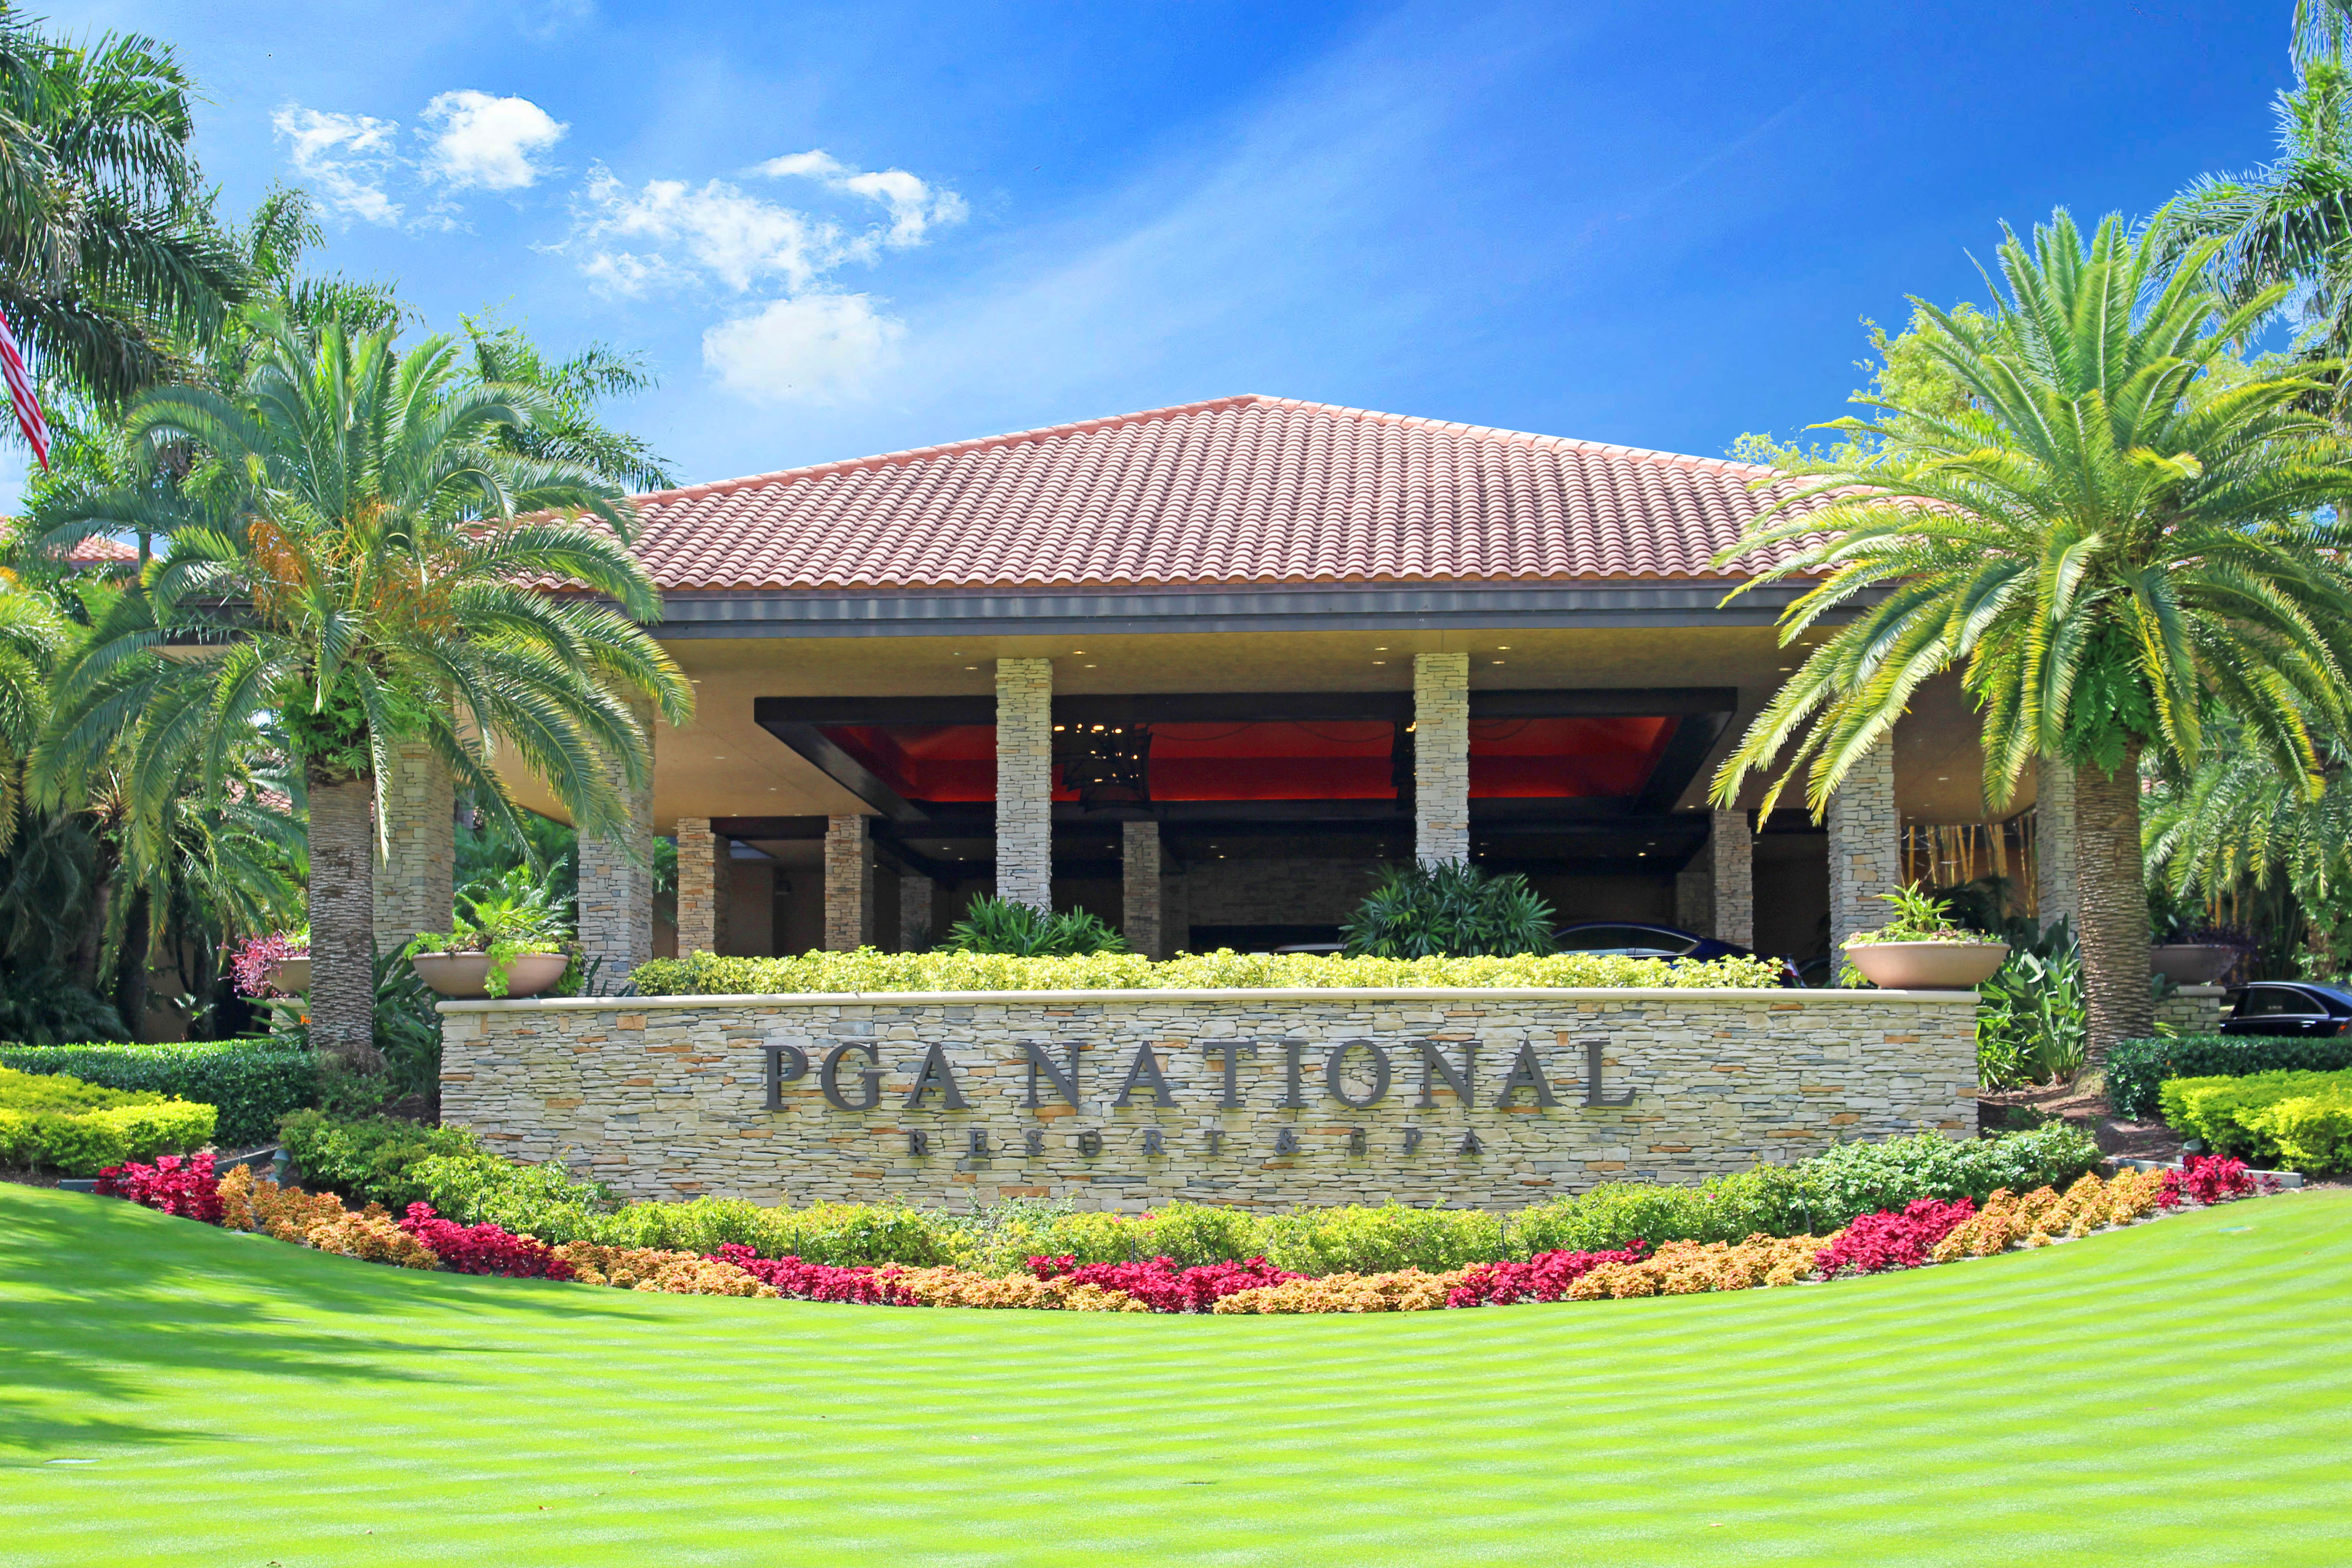 PGA National Resort and Spa